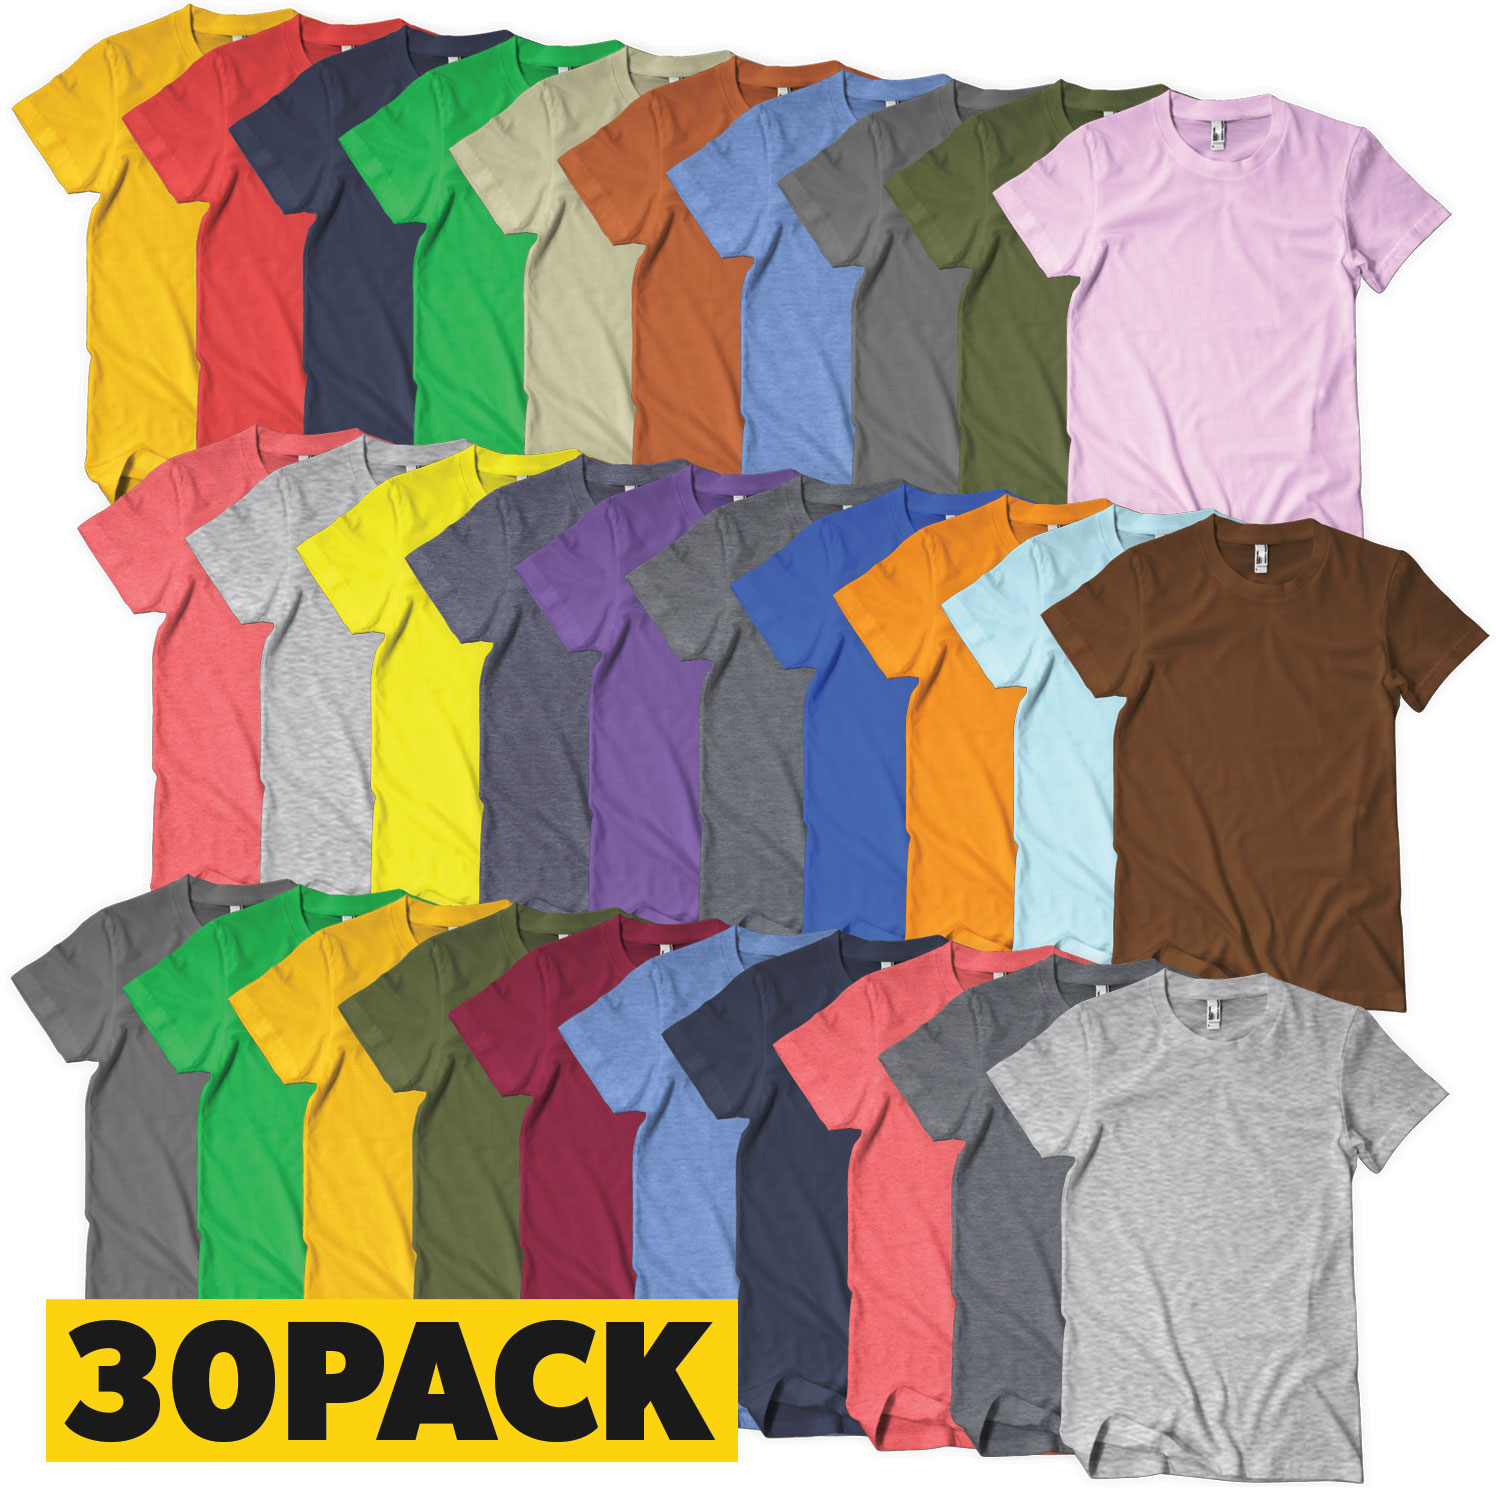 T-Shirts Megapack Colors - 30 pack